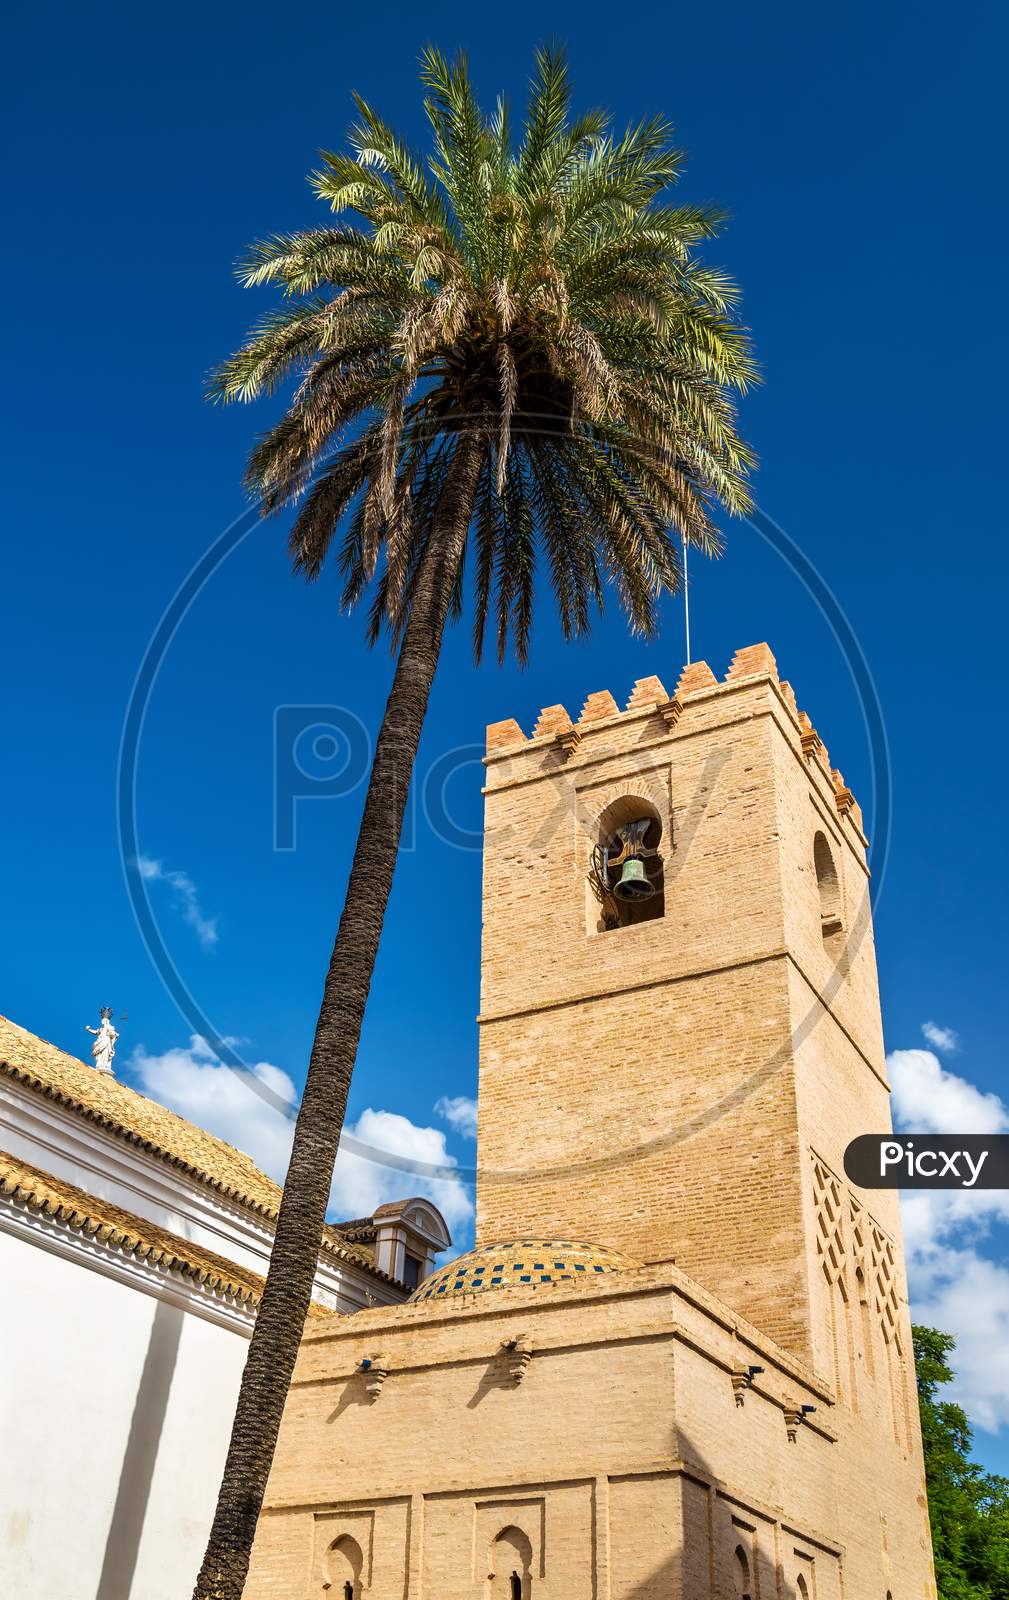 Church Of Santa Catalina In Seville, Spain